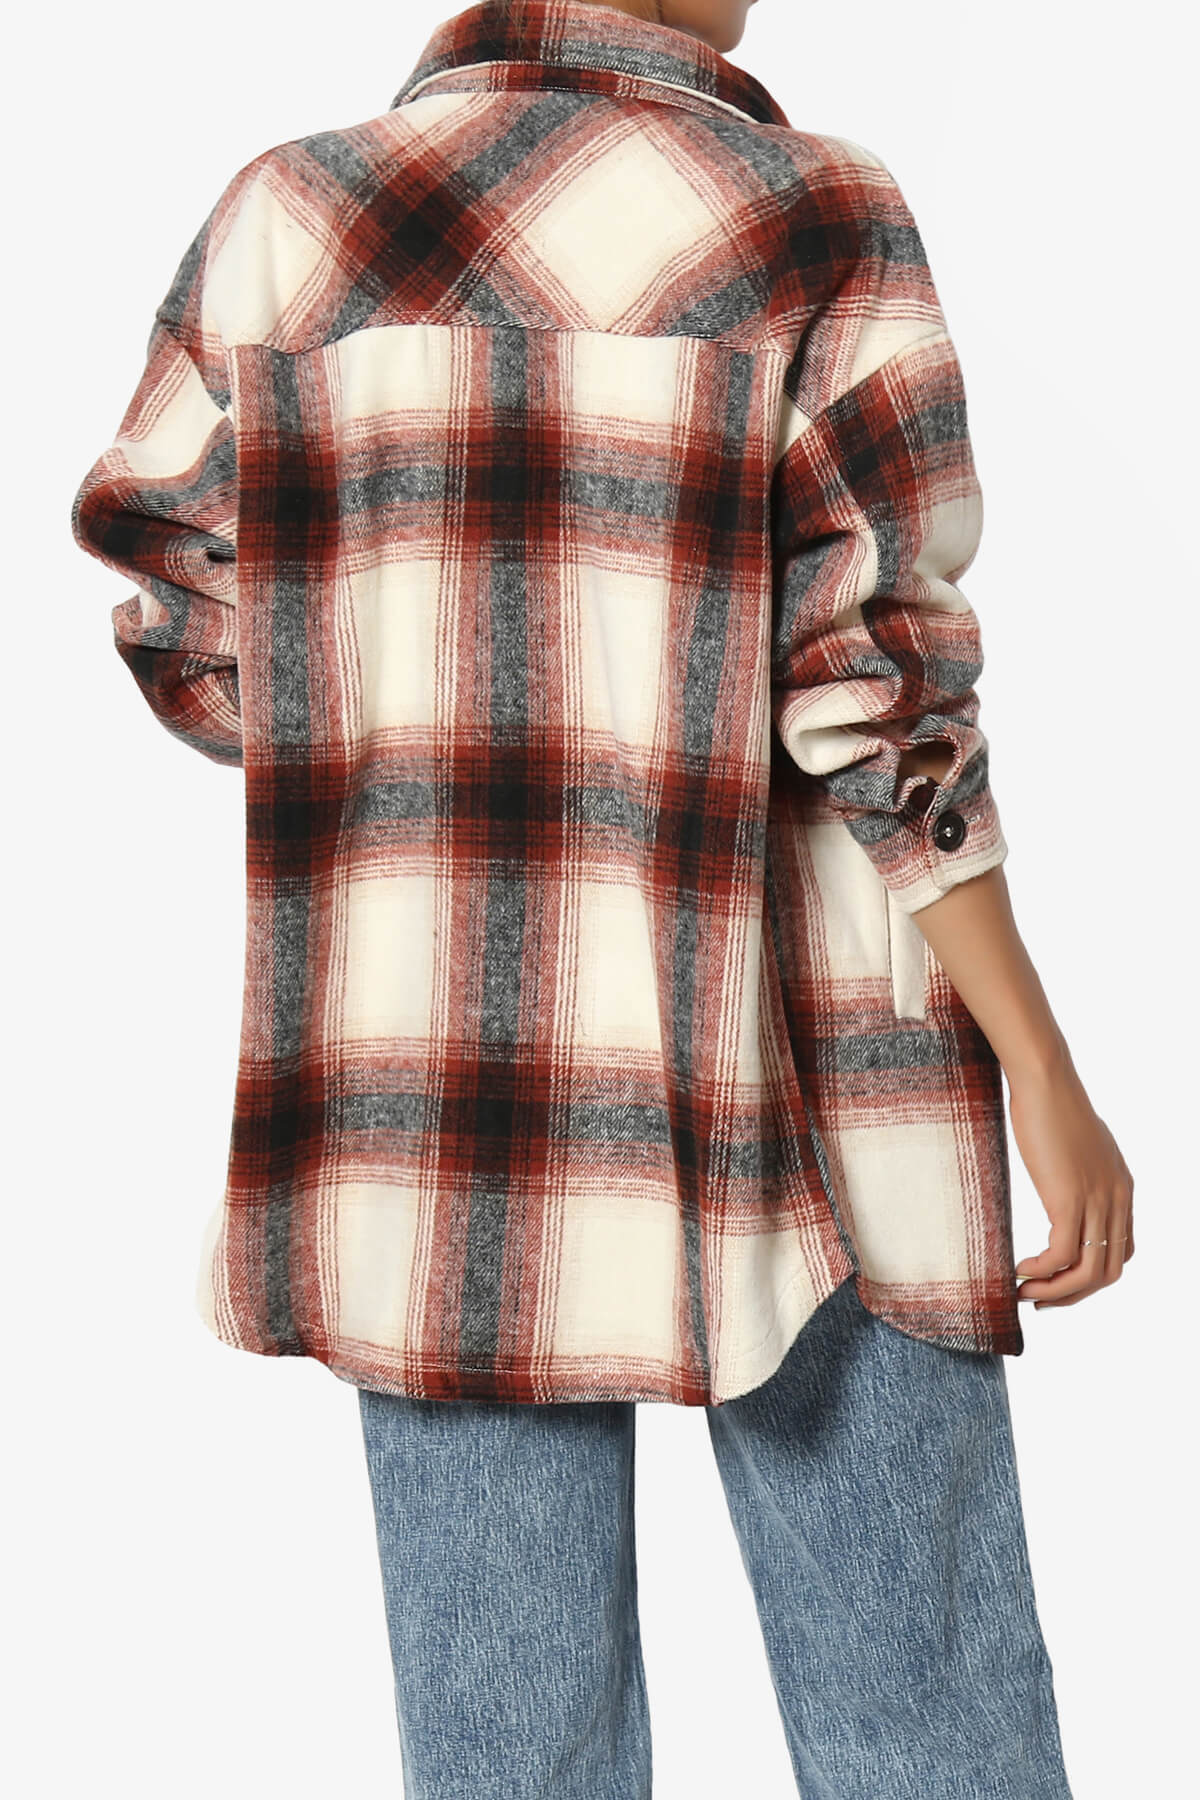 TheMogan Women's Plaid Flannel Long Sleeve Chest Pocket Oversized Shirt Jacket Shacket